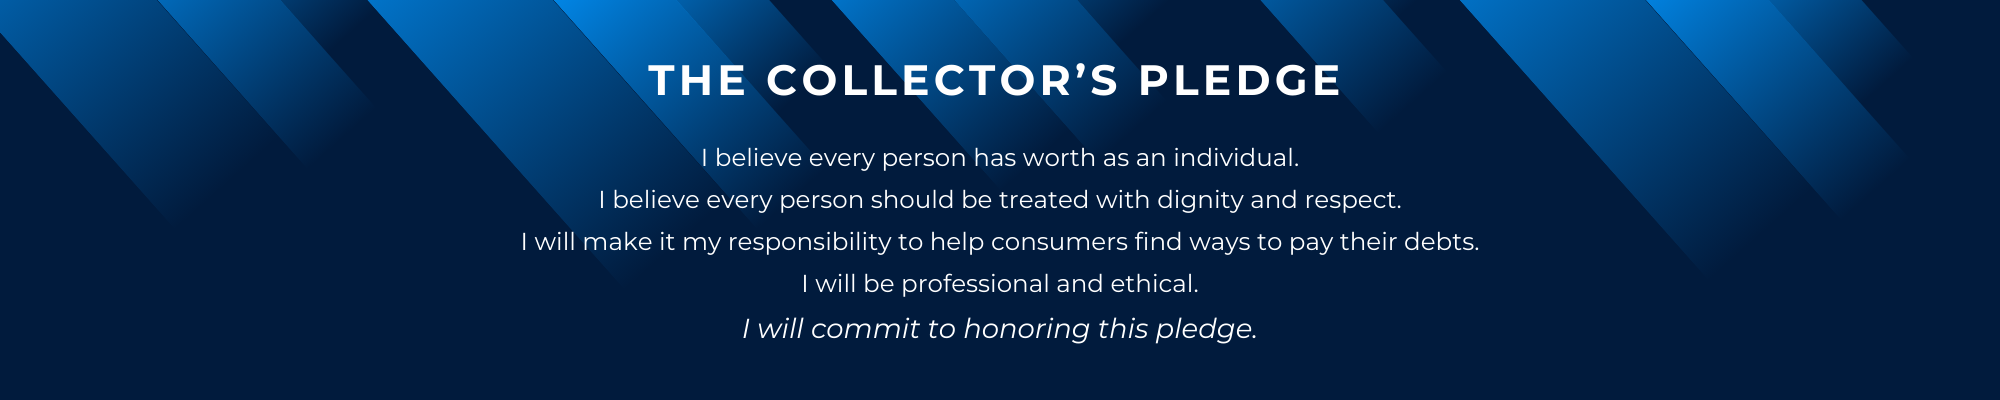 collector's pledge graphic